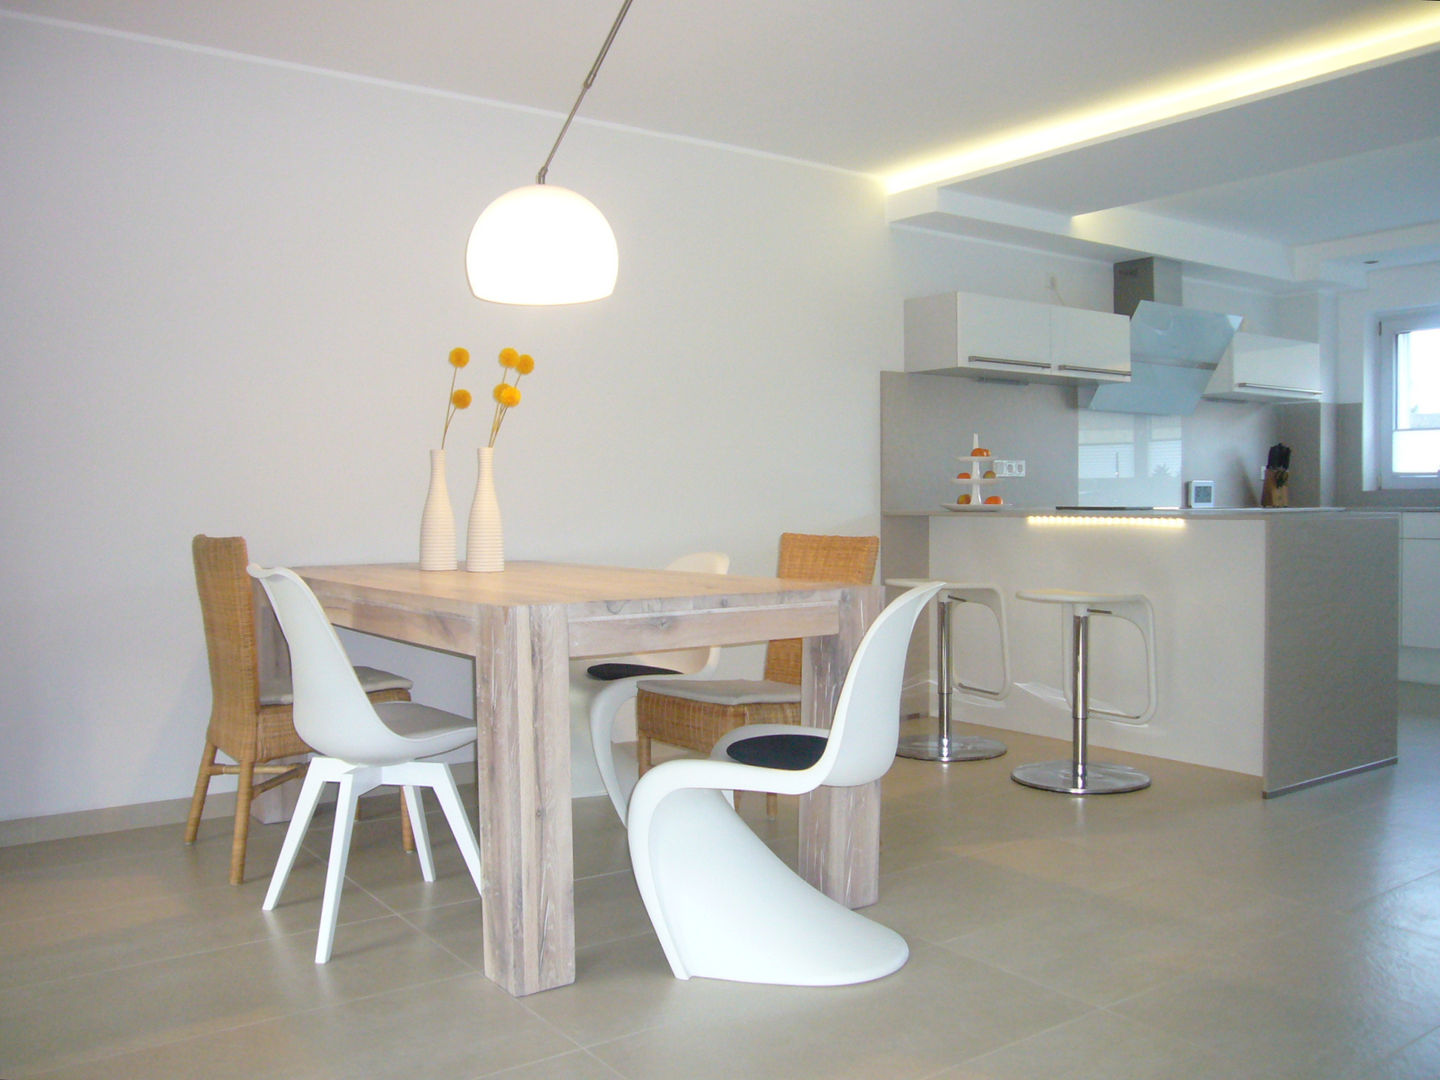 Raumgestaltung - Einfamilienhaus in Selm, raum² - wir machen wohnen raum² - wir machen wohnen Casas modernas: Ideas, imágenes y decoración